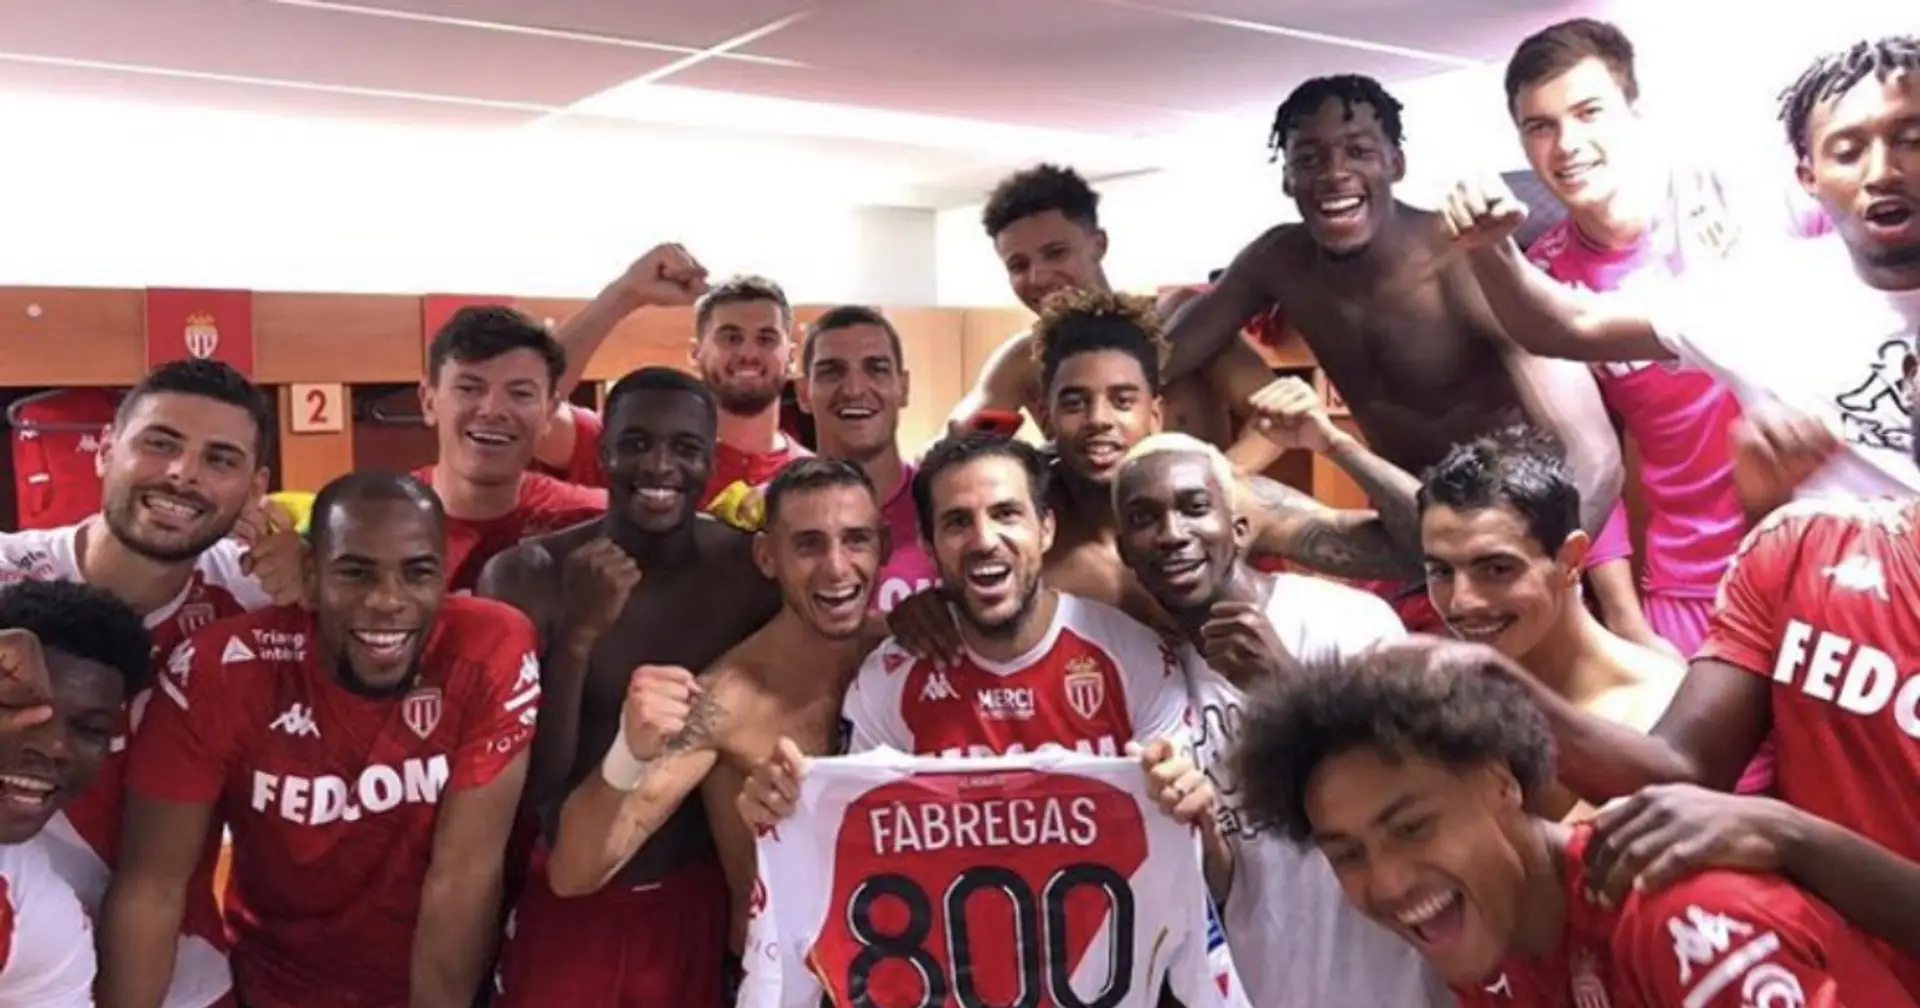 800 first-team games: Cesc Fabregas reaches huge career milestone